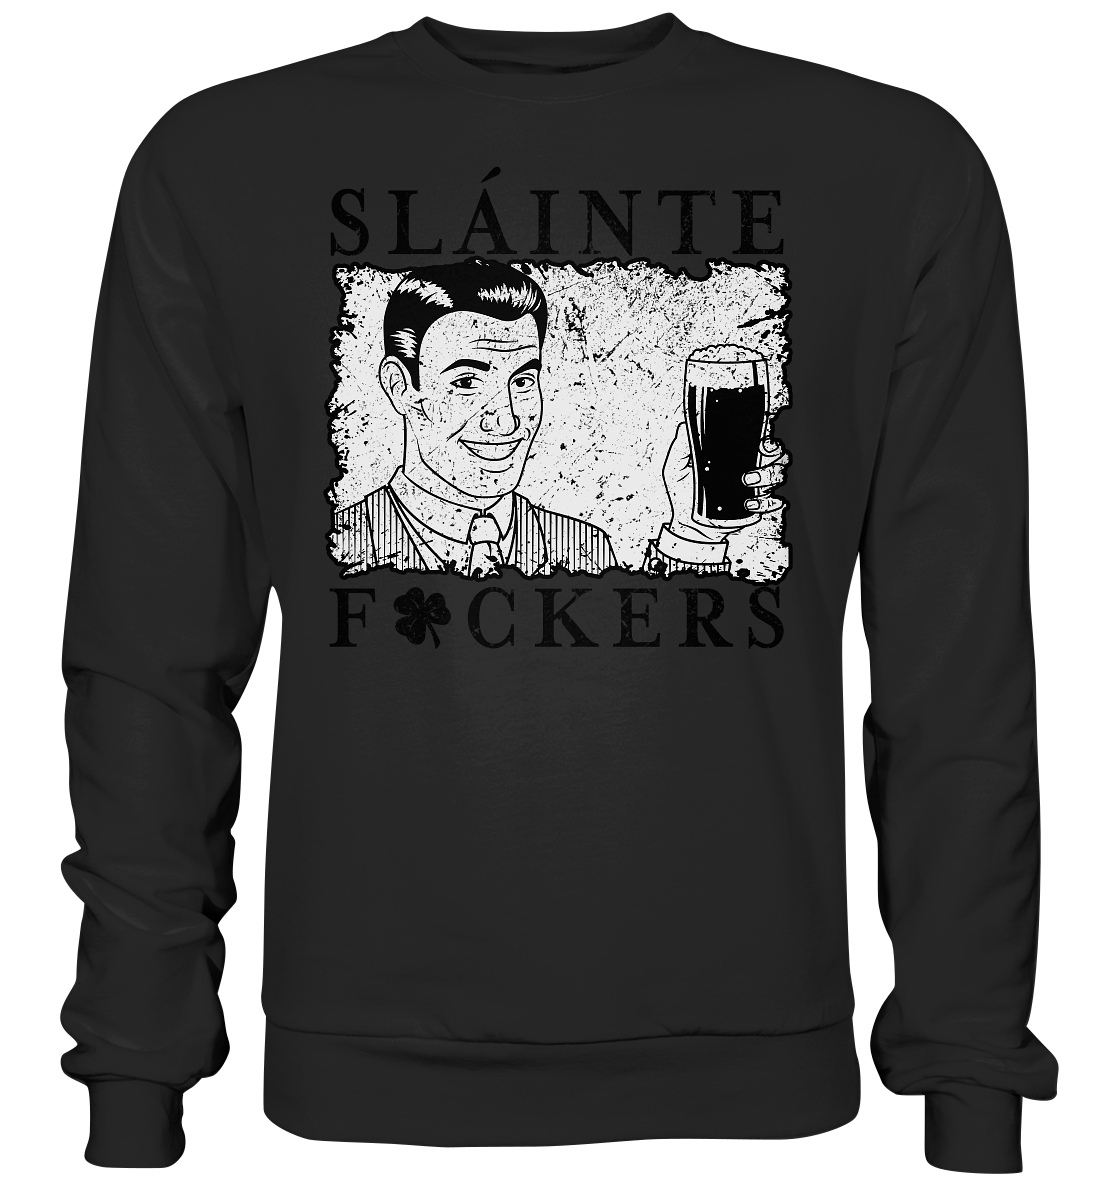 Sláinte "F*ckers" *Shamrock* - Premium Sweatshirt